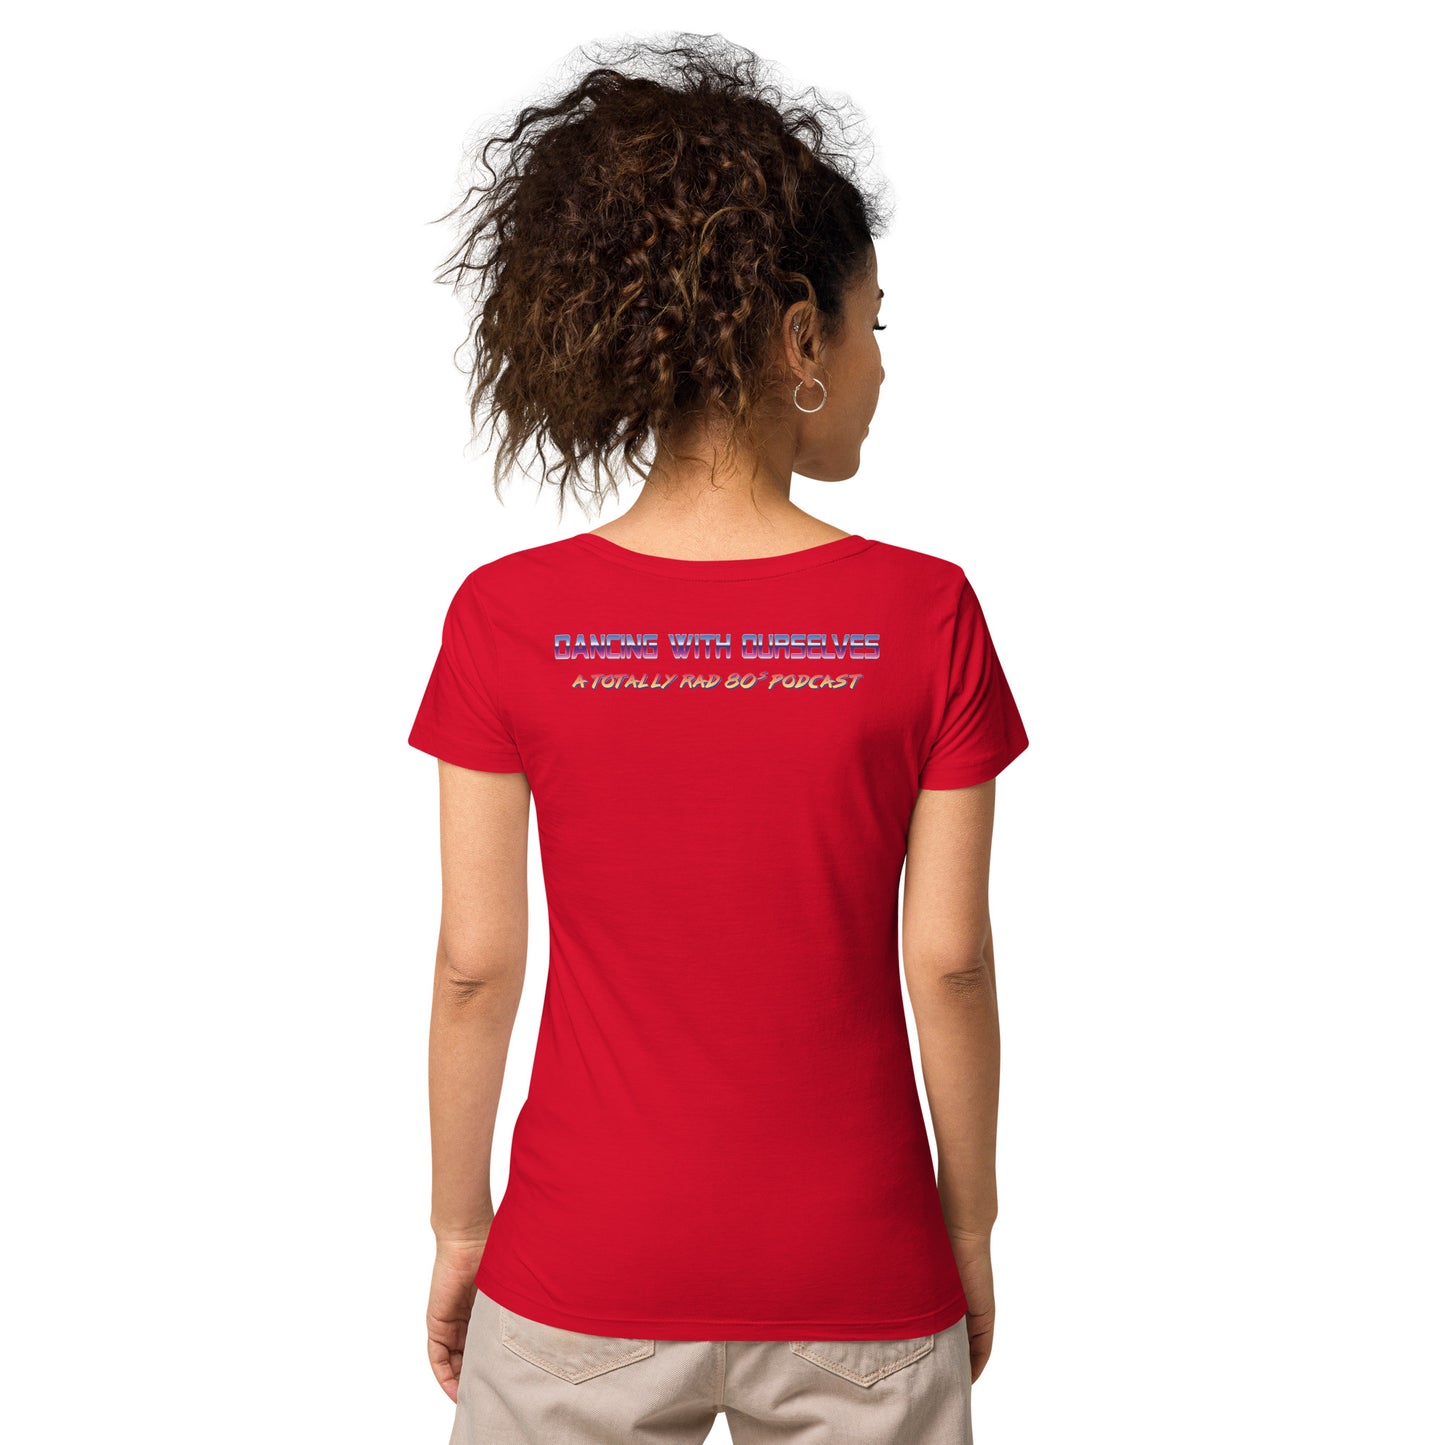 DWO Dark Colored Women’s Organic T-Shirt